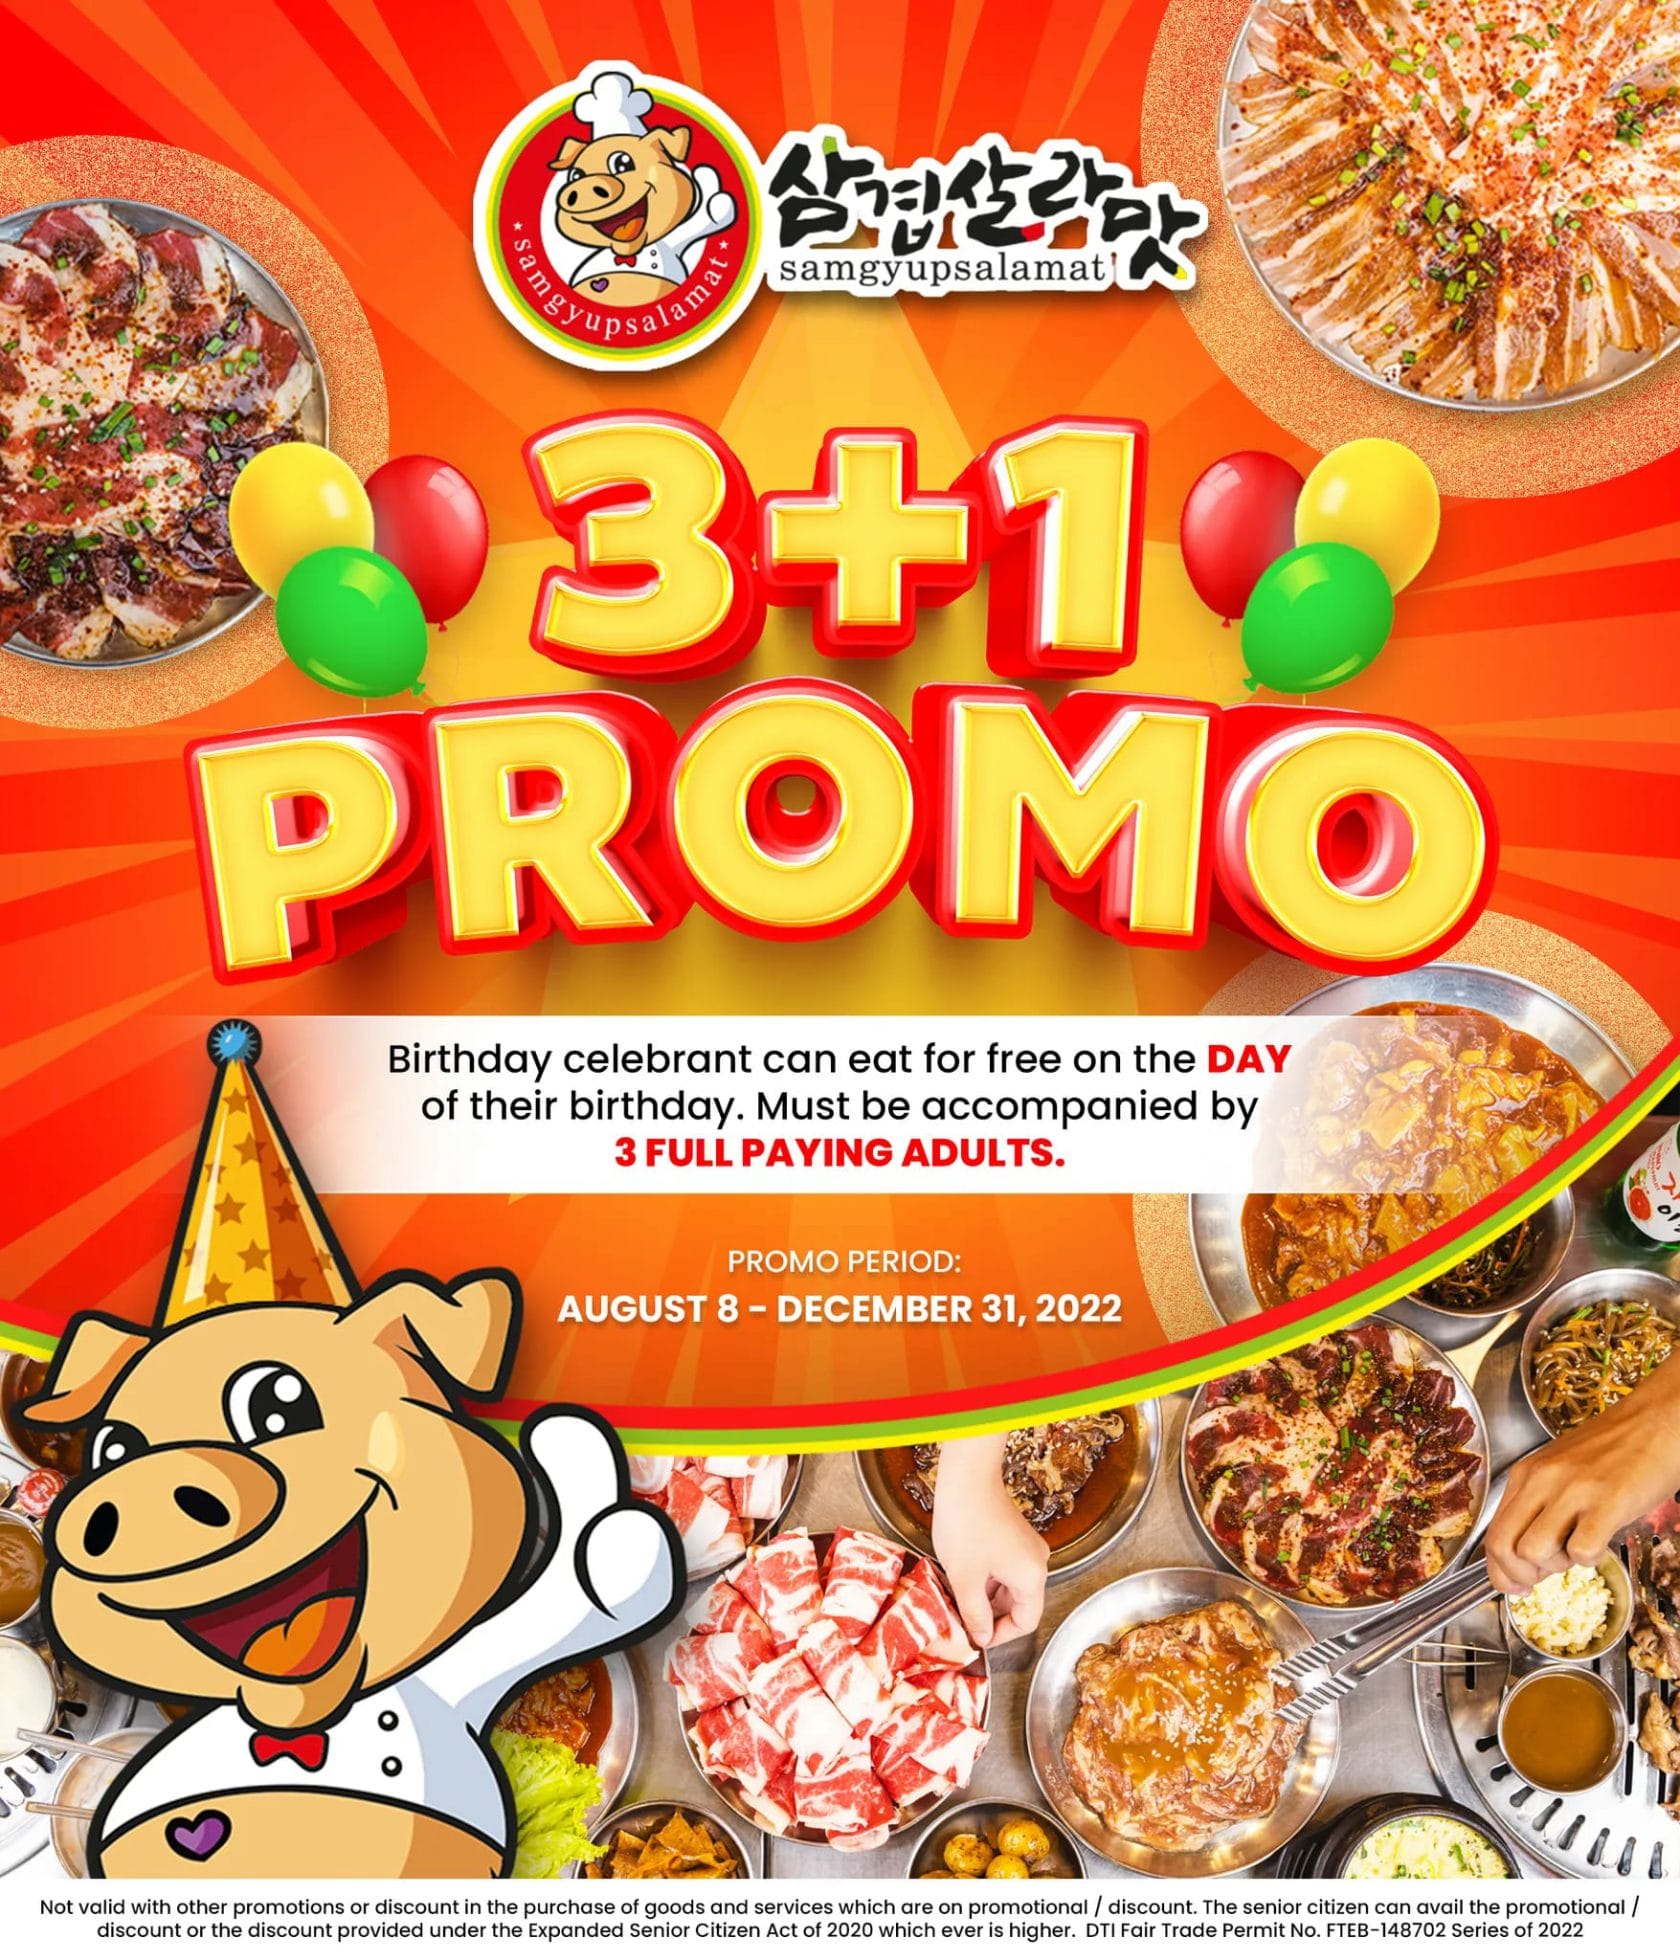 Samgyupsalamat 3+1 Birthday Promo Deals Pinoy